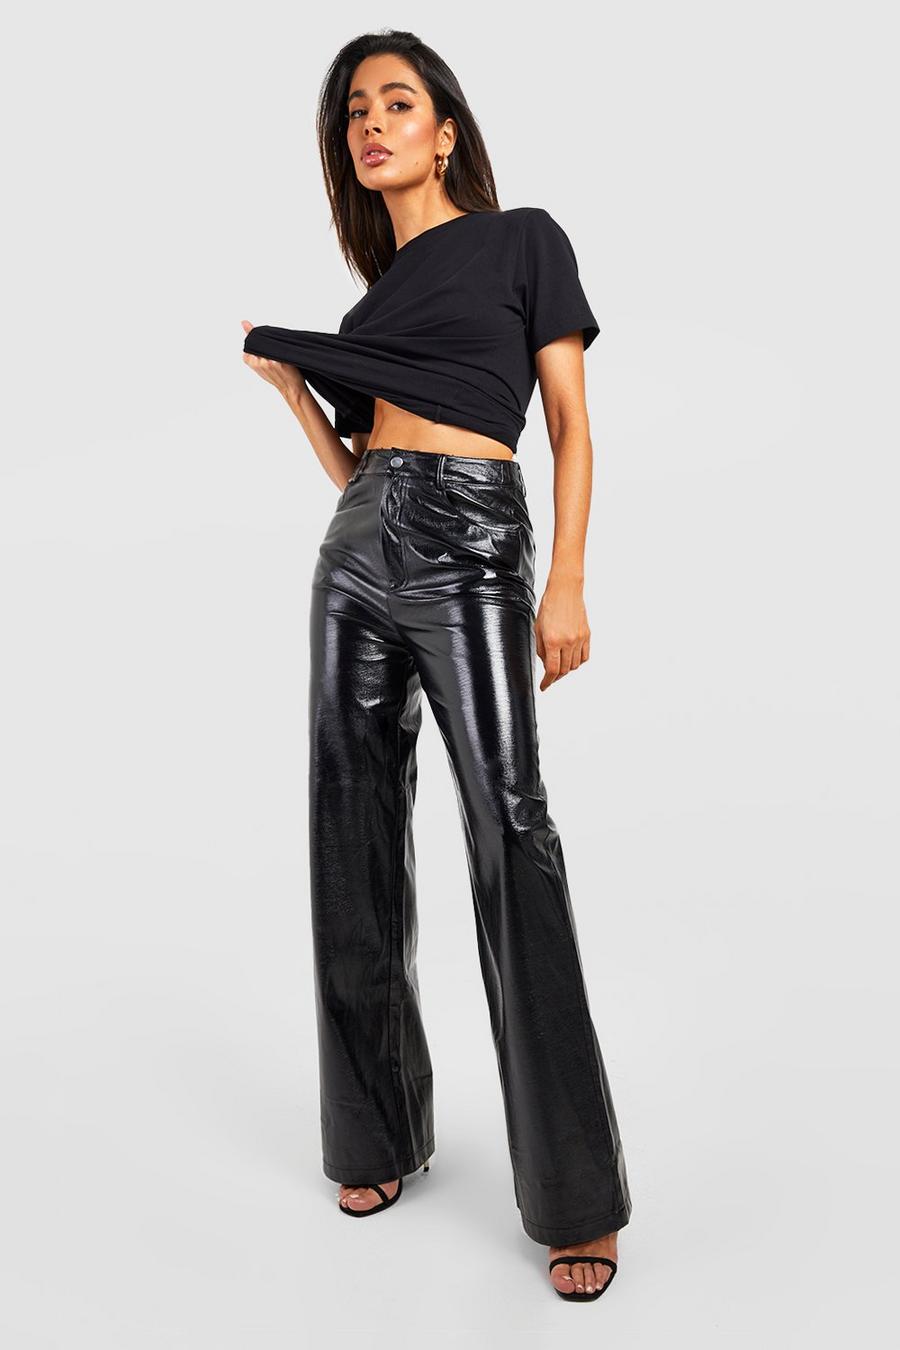 Black High Waisted Metallic Full Length Pants